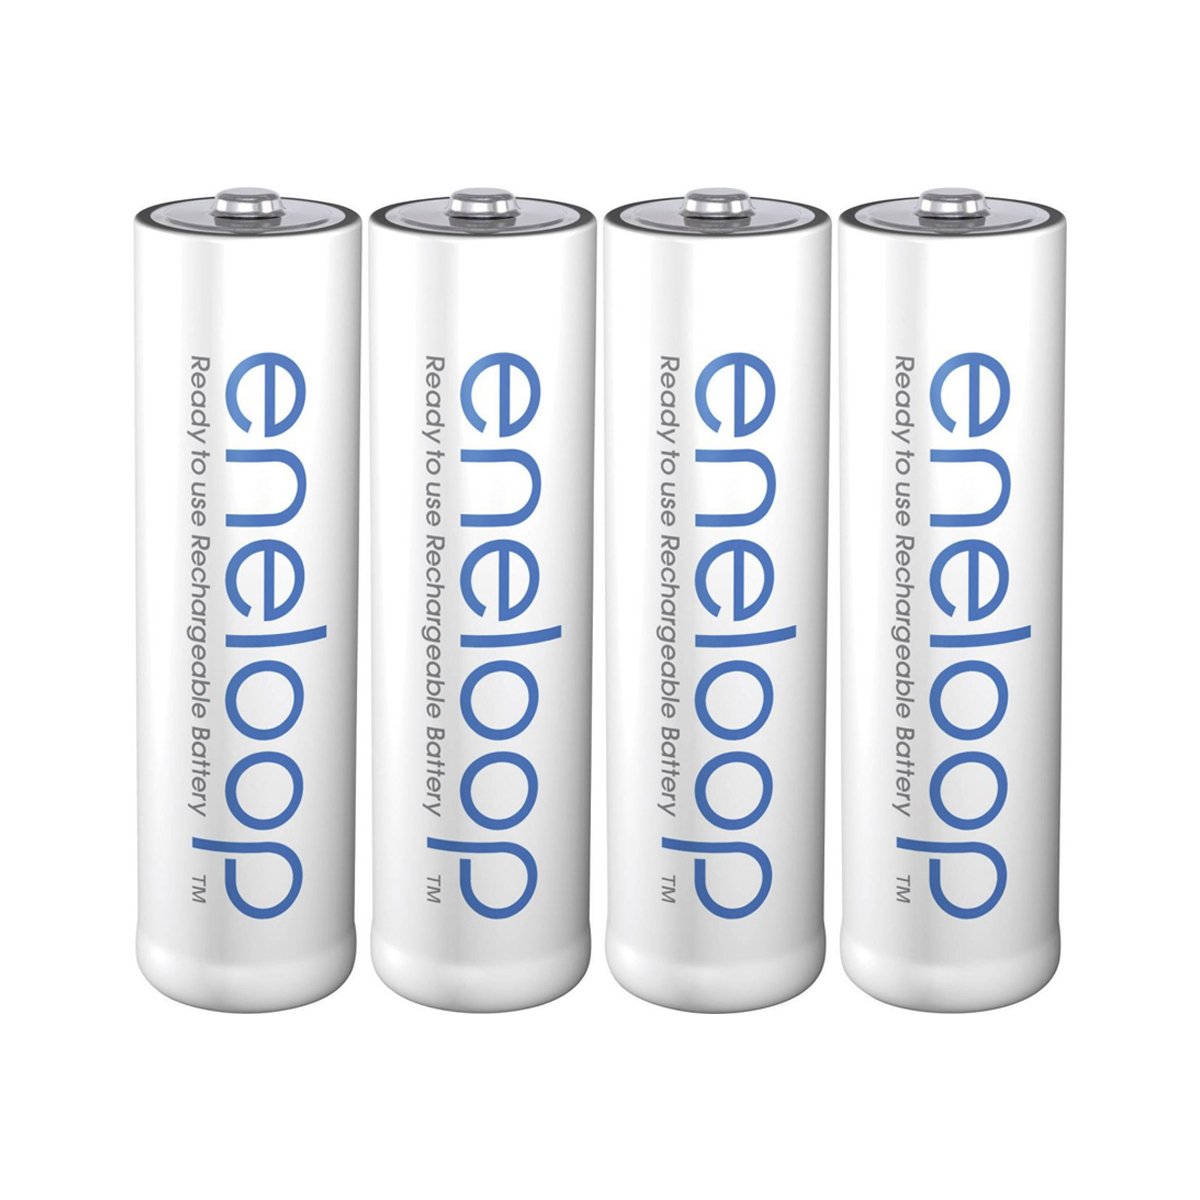 Eneloop AA Rechargeable Batteries x4 (White) – JG Superstore